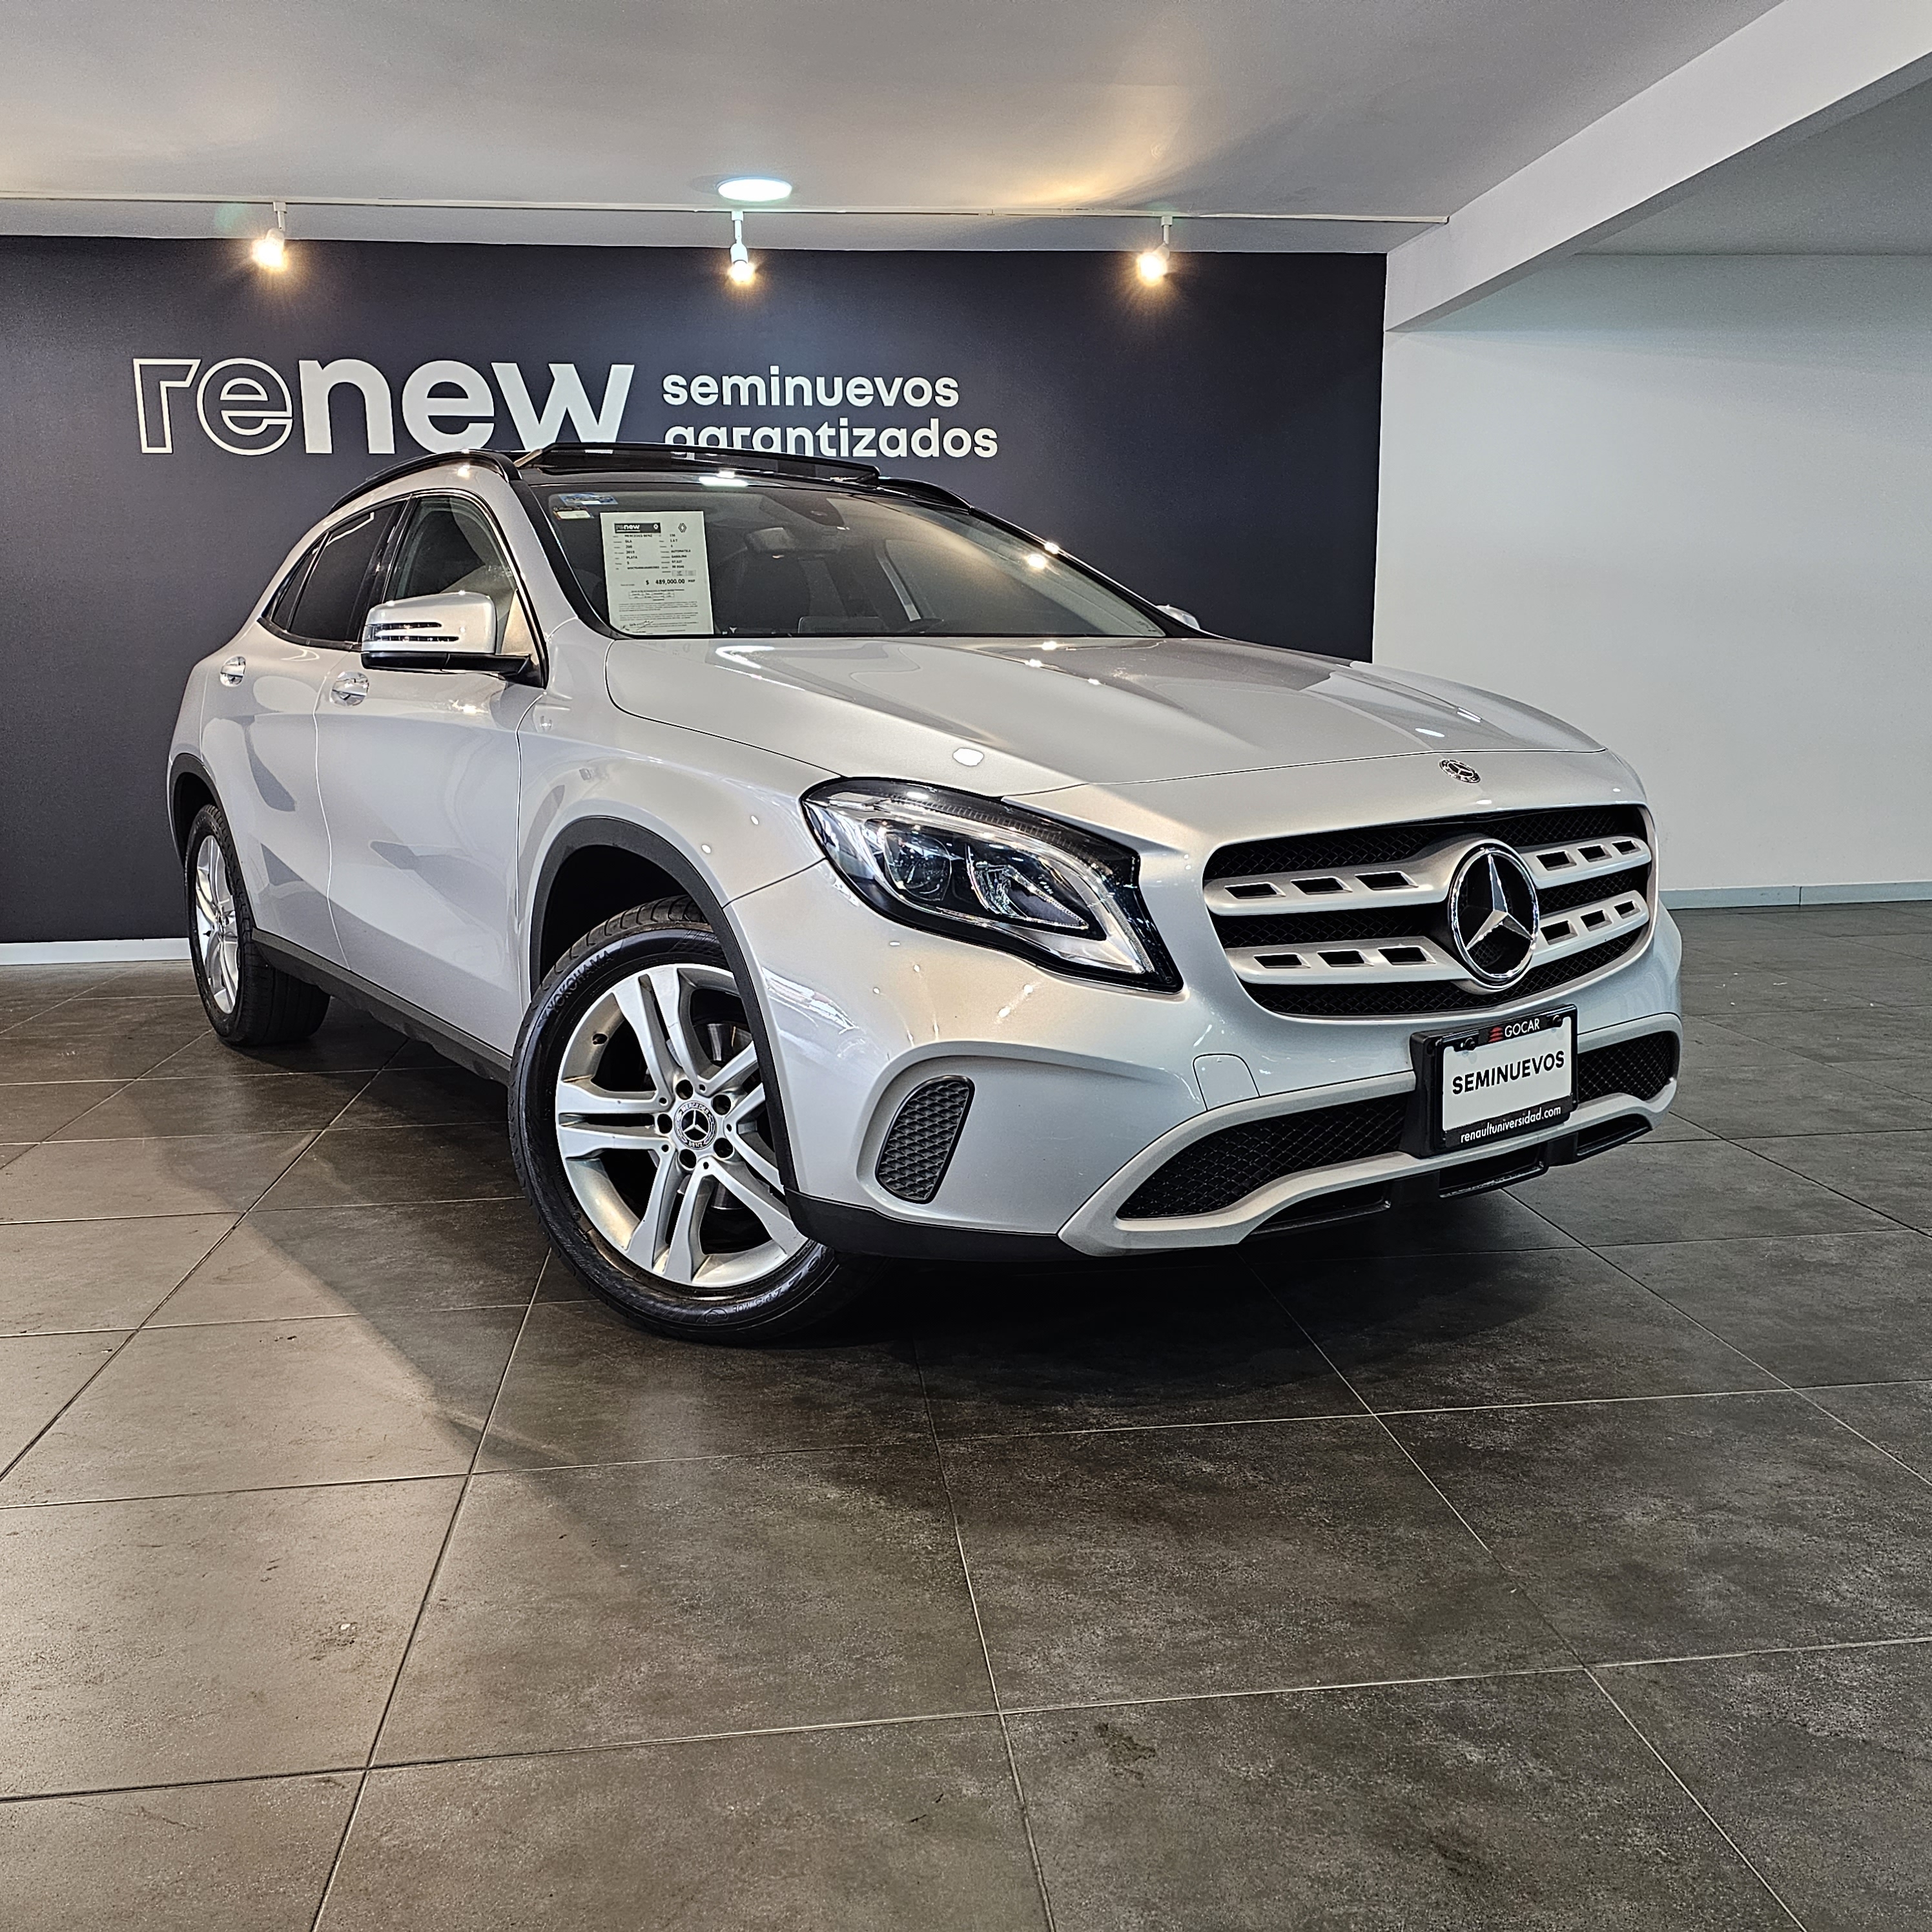 2019 Mercedes Benz Clase Gla Vud